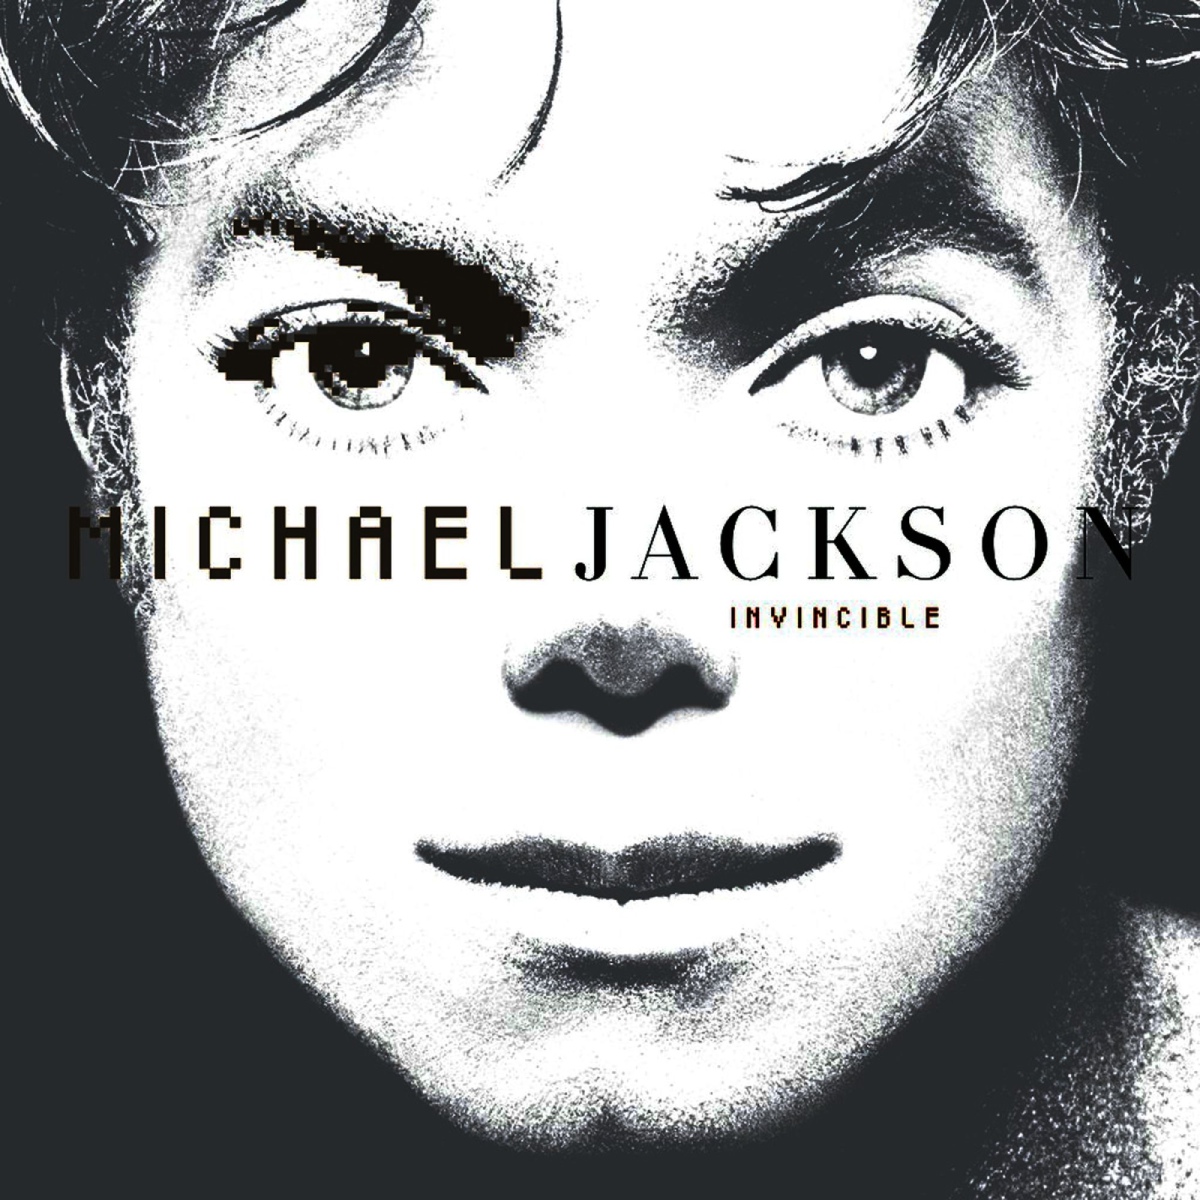 Michael Jackson album "Invincible"